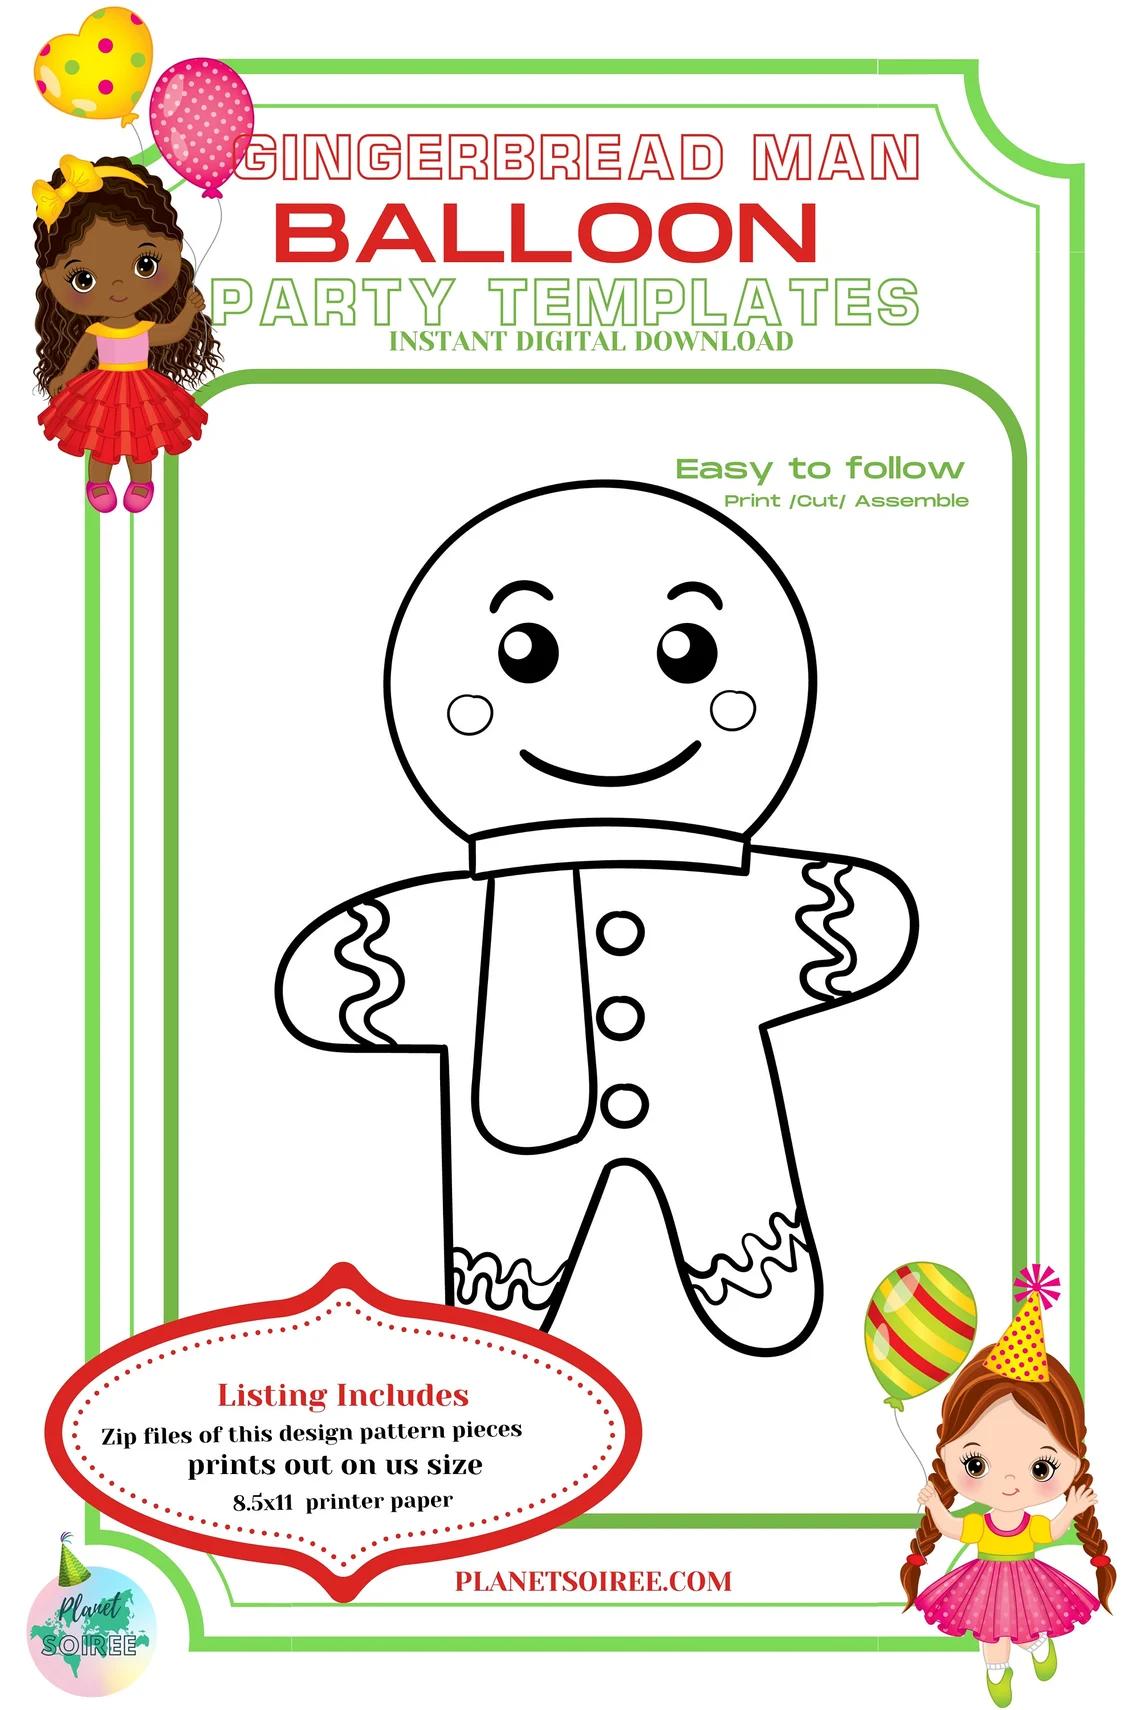 Gingerbread Man Balloon Template, Digital Downloads,Balloon Mosaic Template,Christmas Cookie Template,Birthday and party Balloon templates.